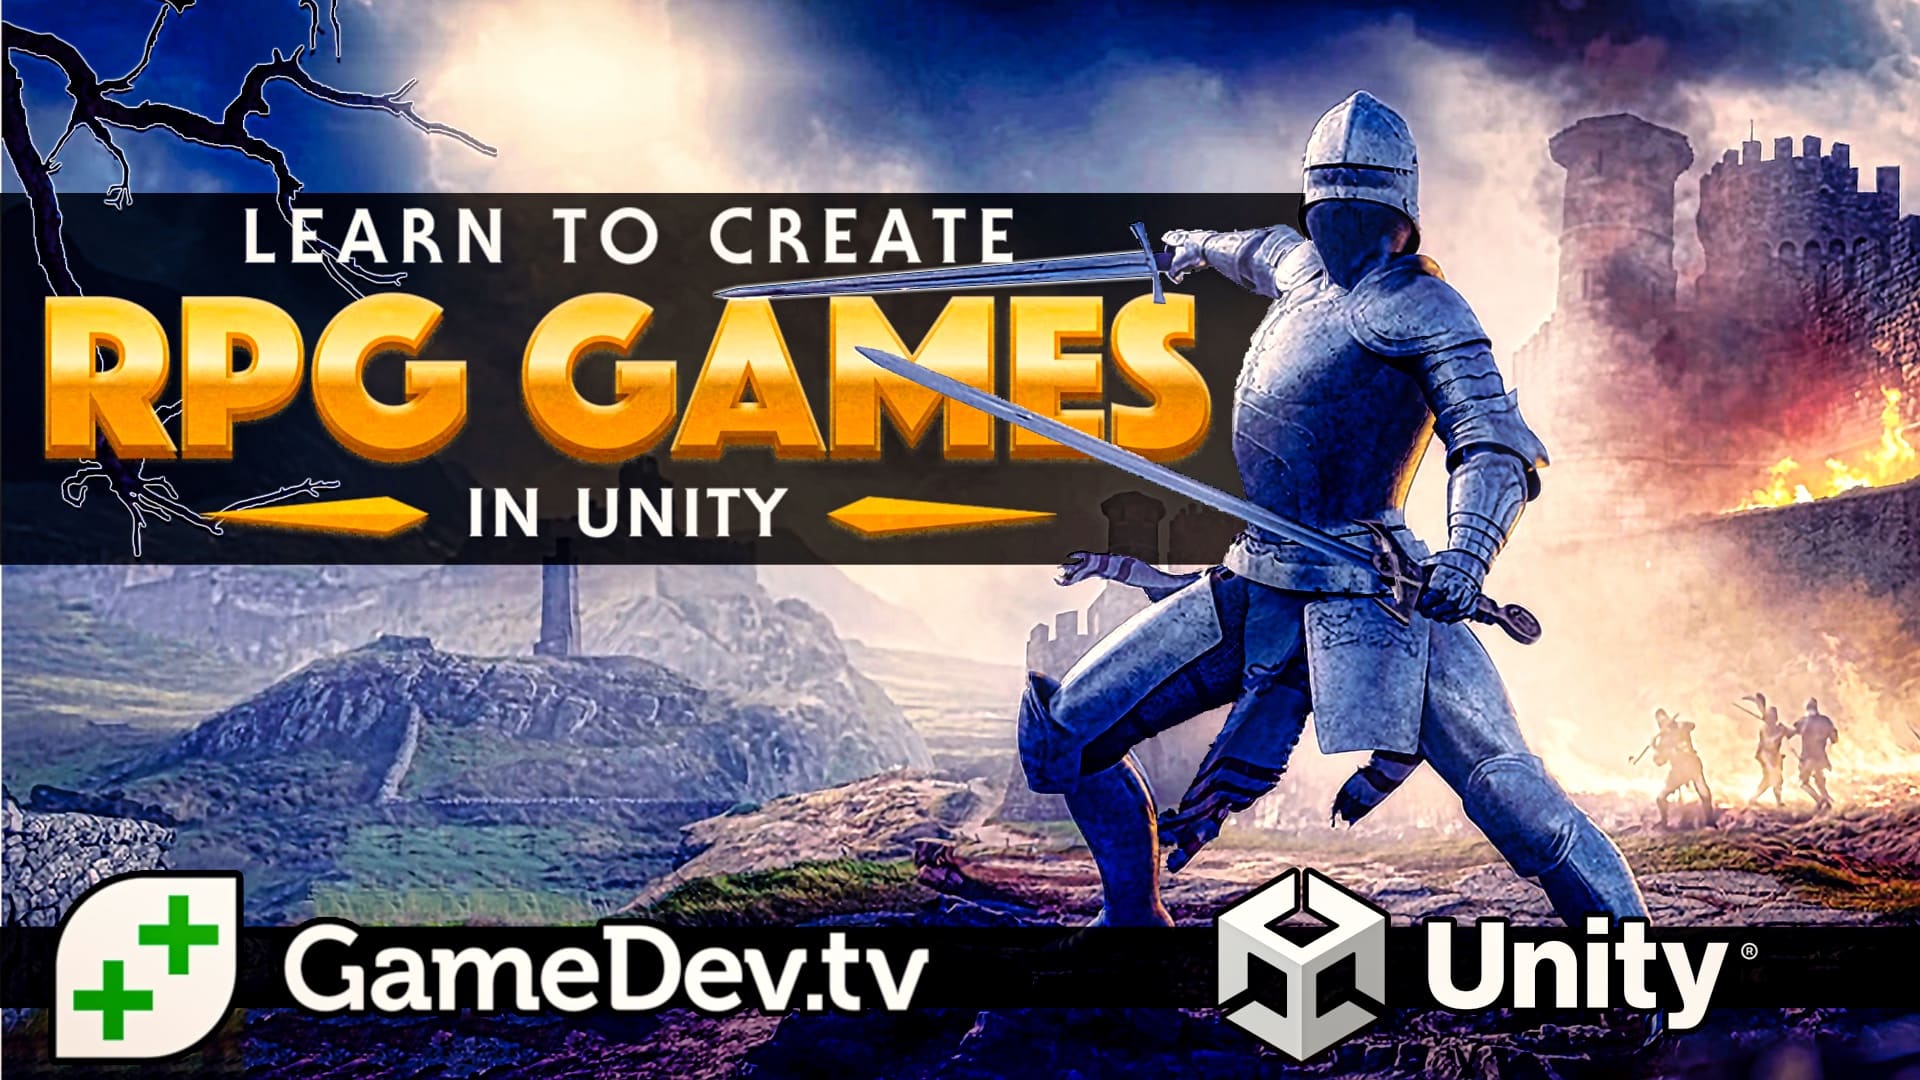 Learn to Create RPG Games in Unity GameDev.tv Humble Bundle